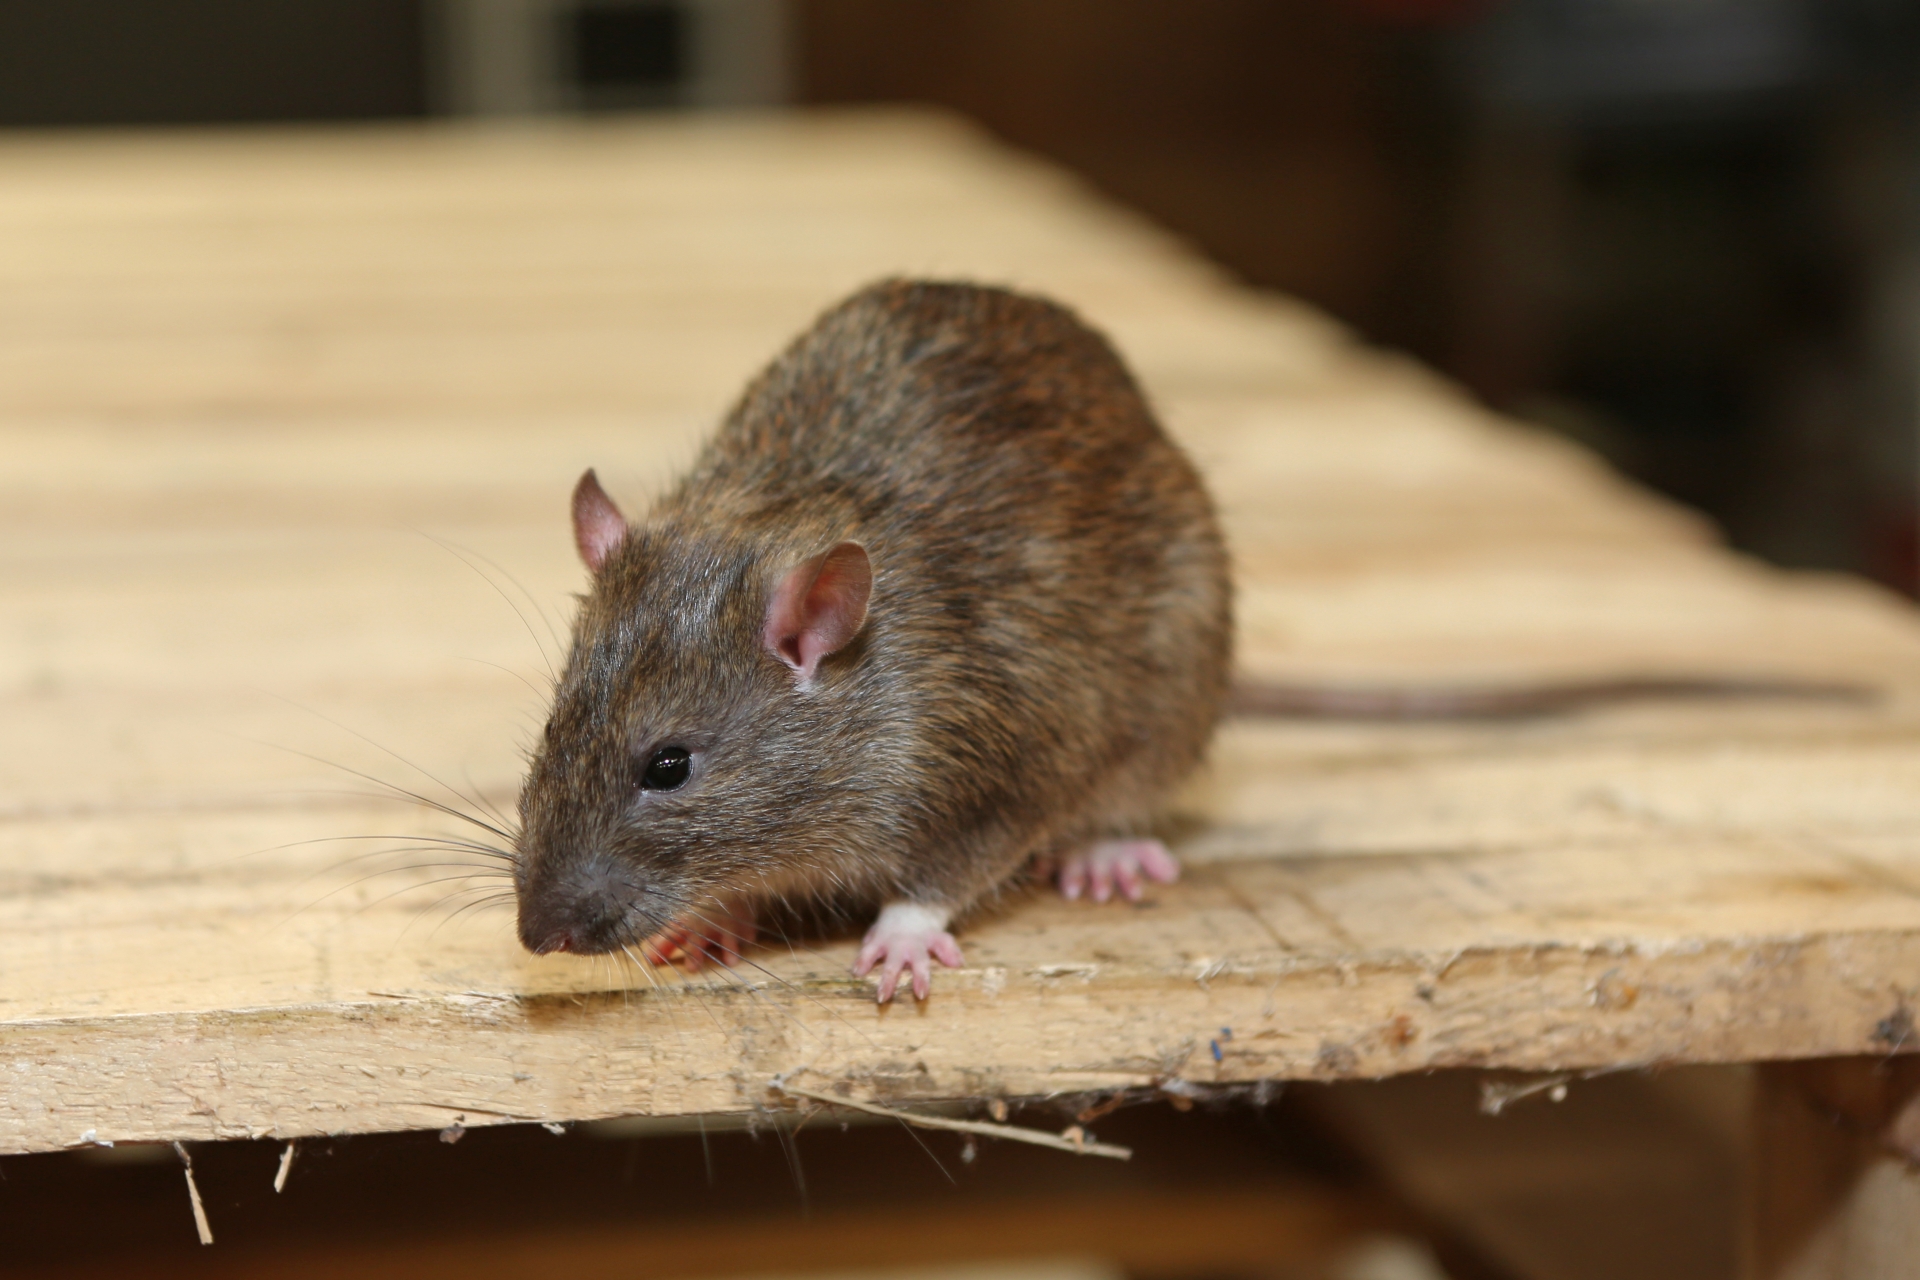 Rat Infestation, Pest Control in West Drayton, Harmondsworth, Sipson, UB7. Call Now 020 8166 9746